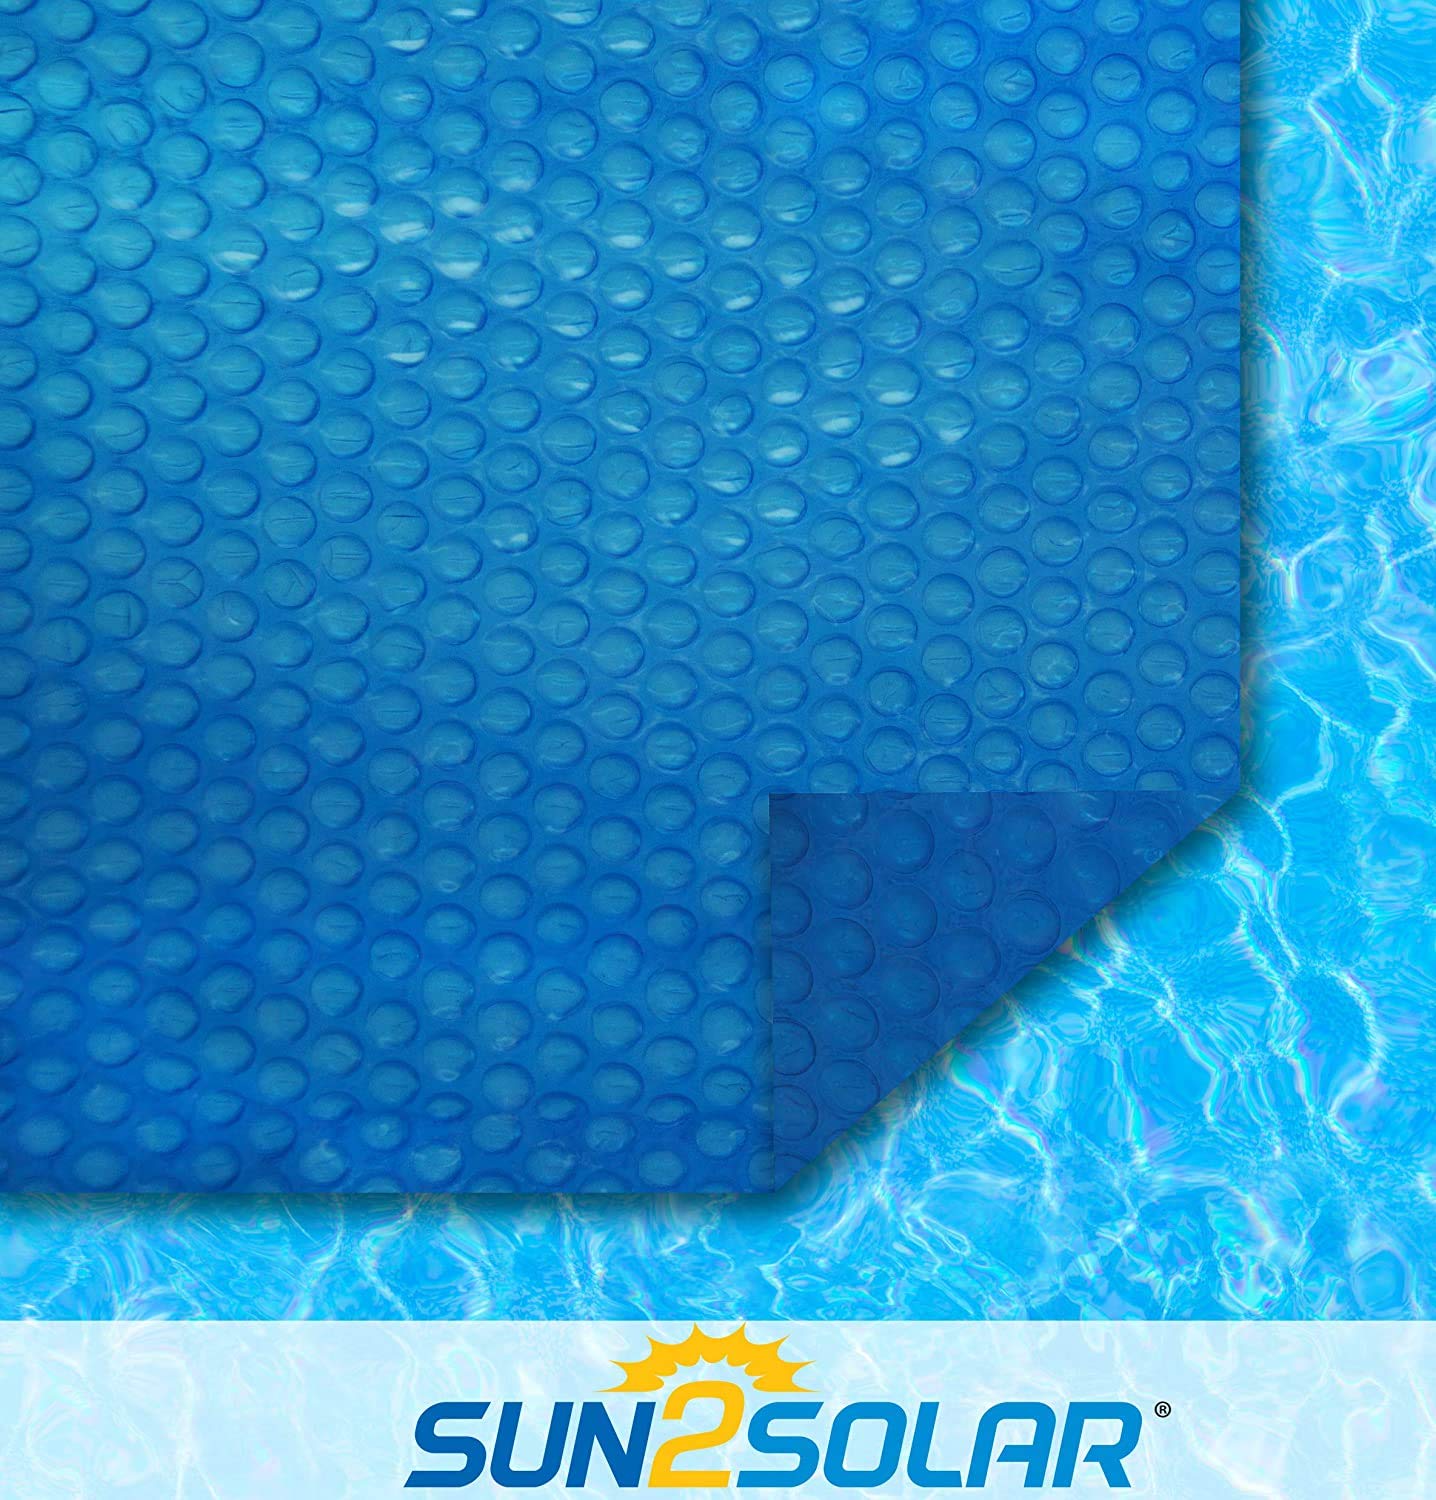 Sun2Solar Blue 15-Foot Round Solar Cover | 1200 Series Style